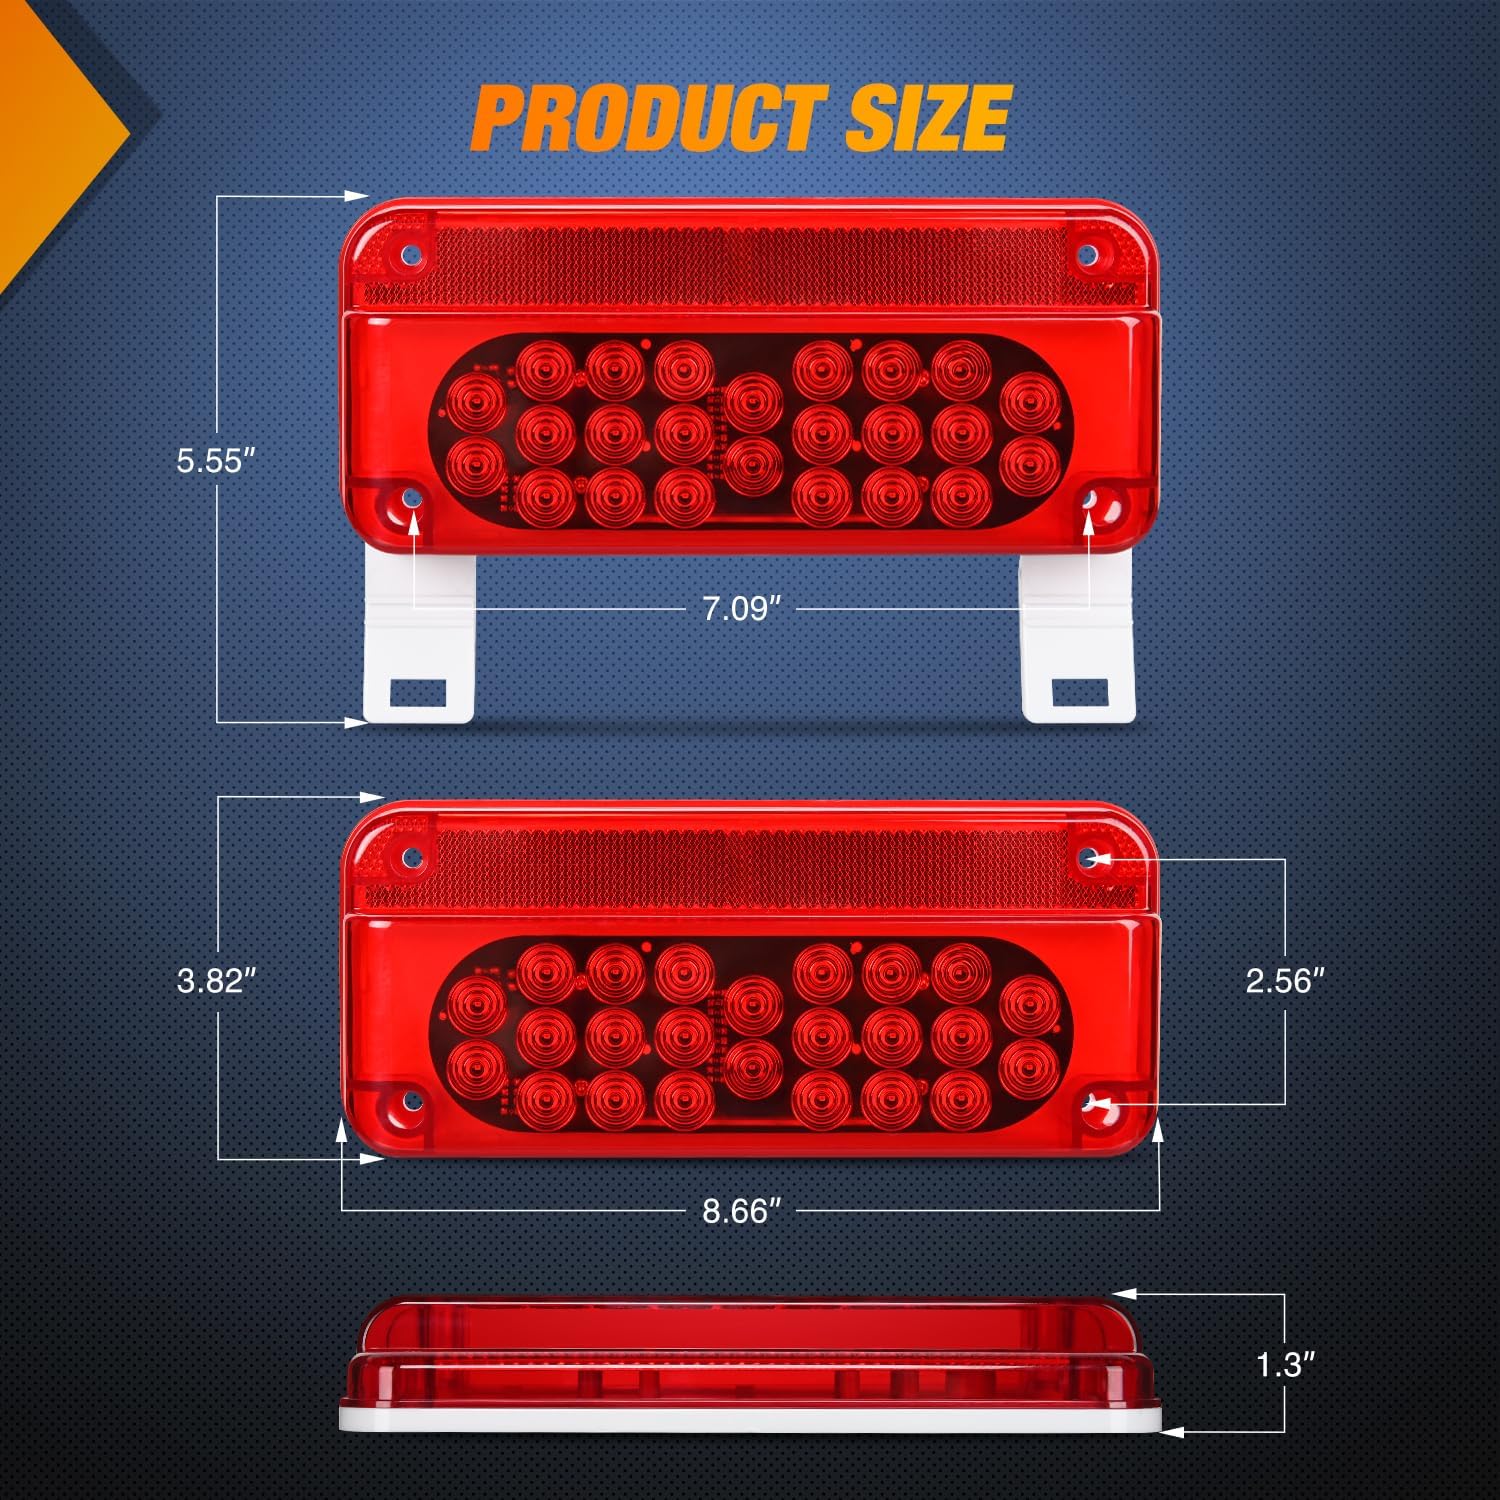 54Leds LED RV White License Plate Red Tail Lights Nilight